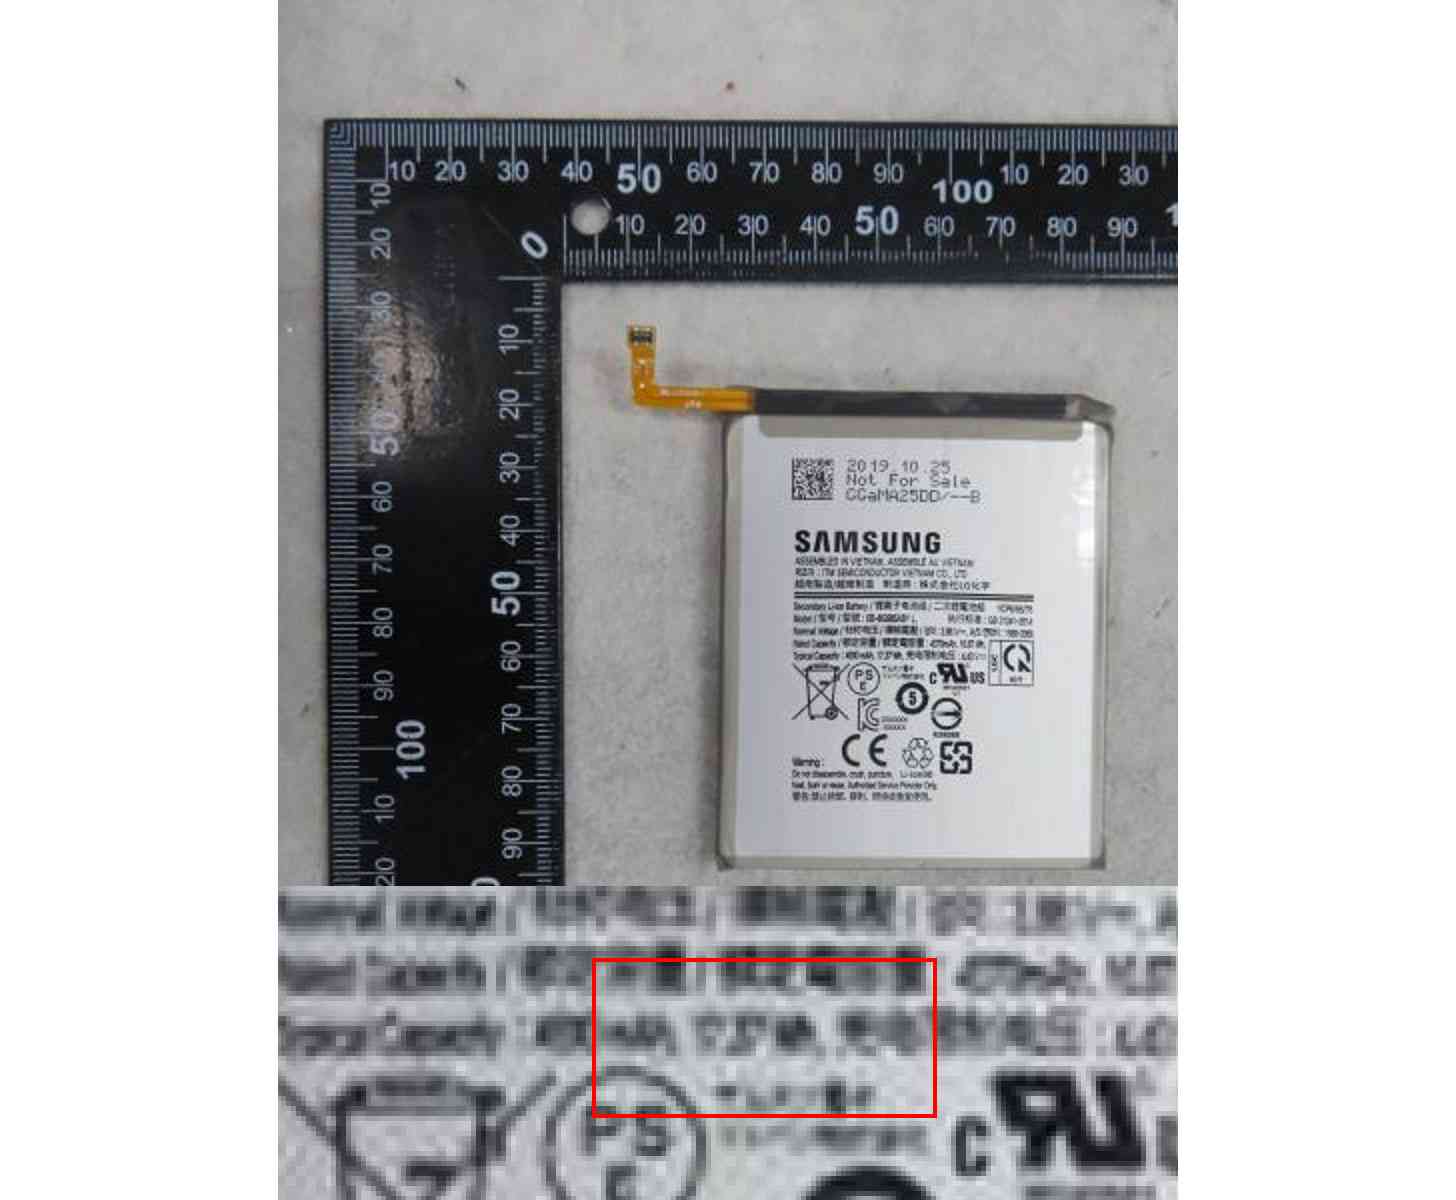 Samsung Galaxy S11 battery leak